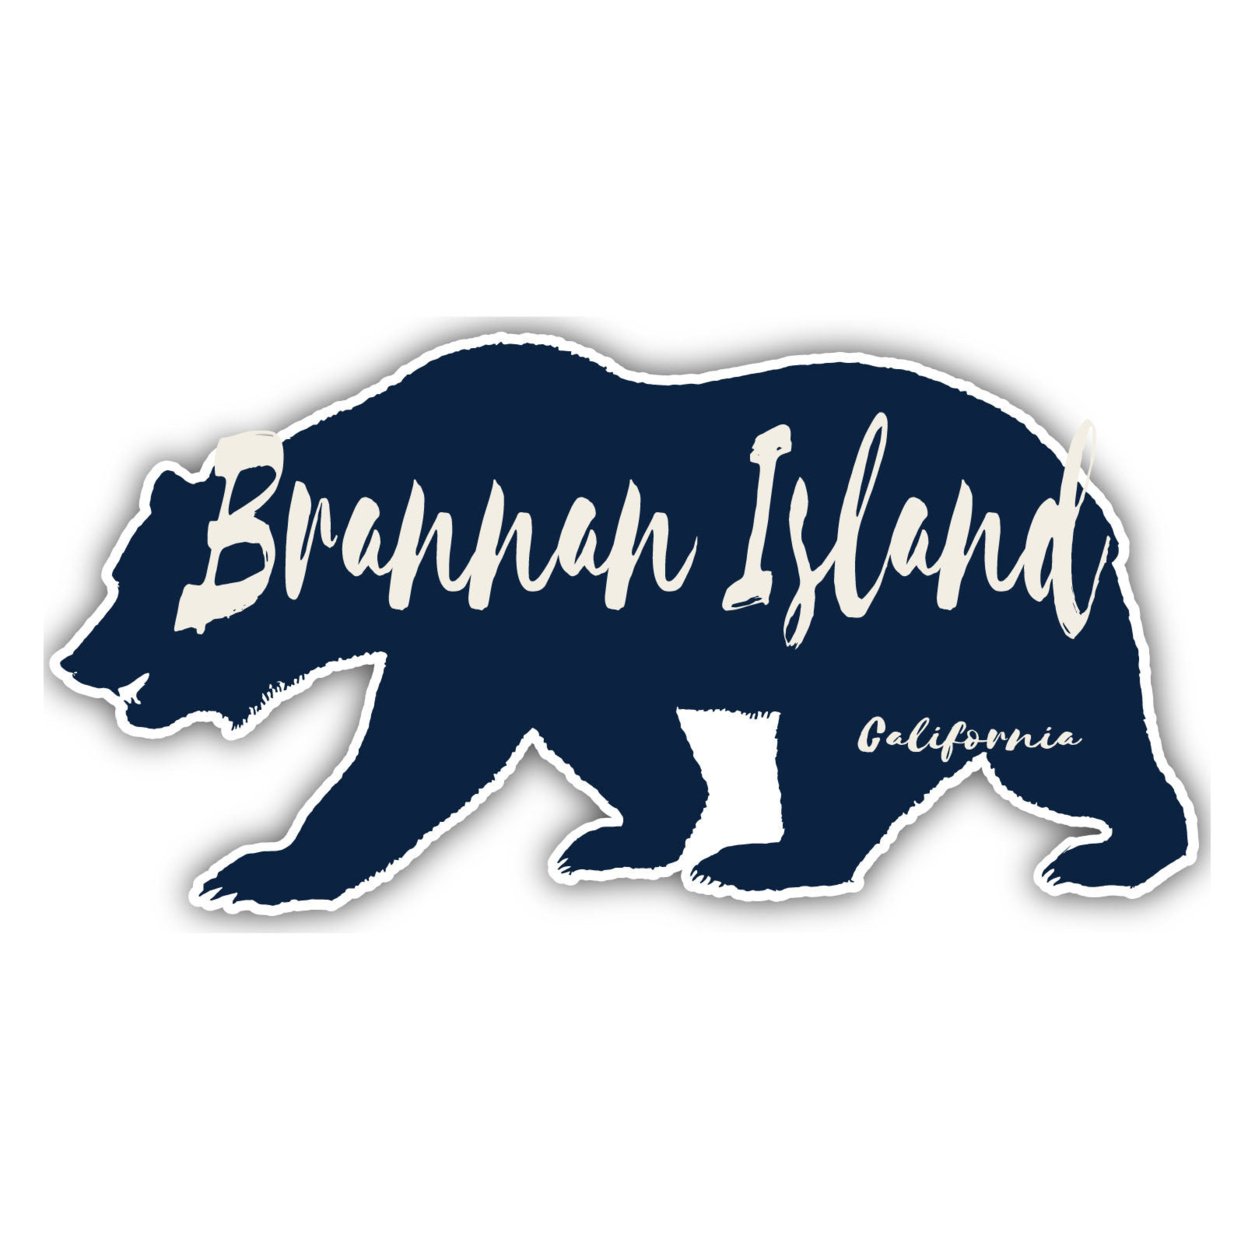 Brannan Island California Souvenir Decorative Stickers (Choose Theme And Size) - 4-Pack, 8-Inch, Bear